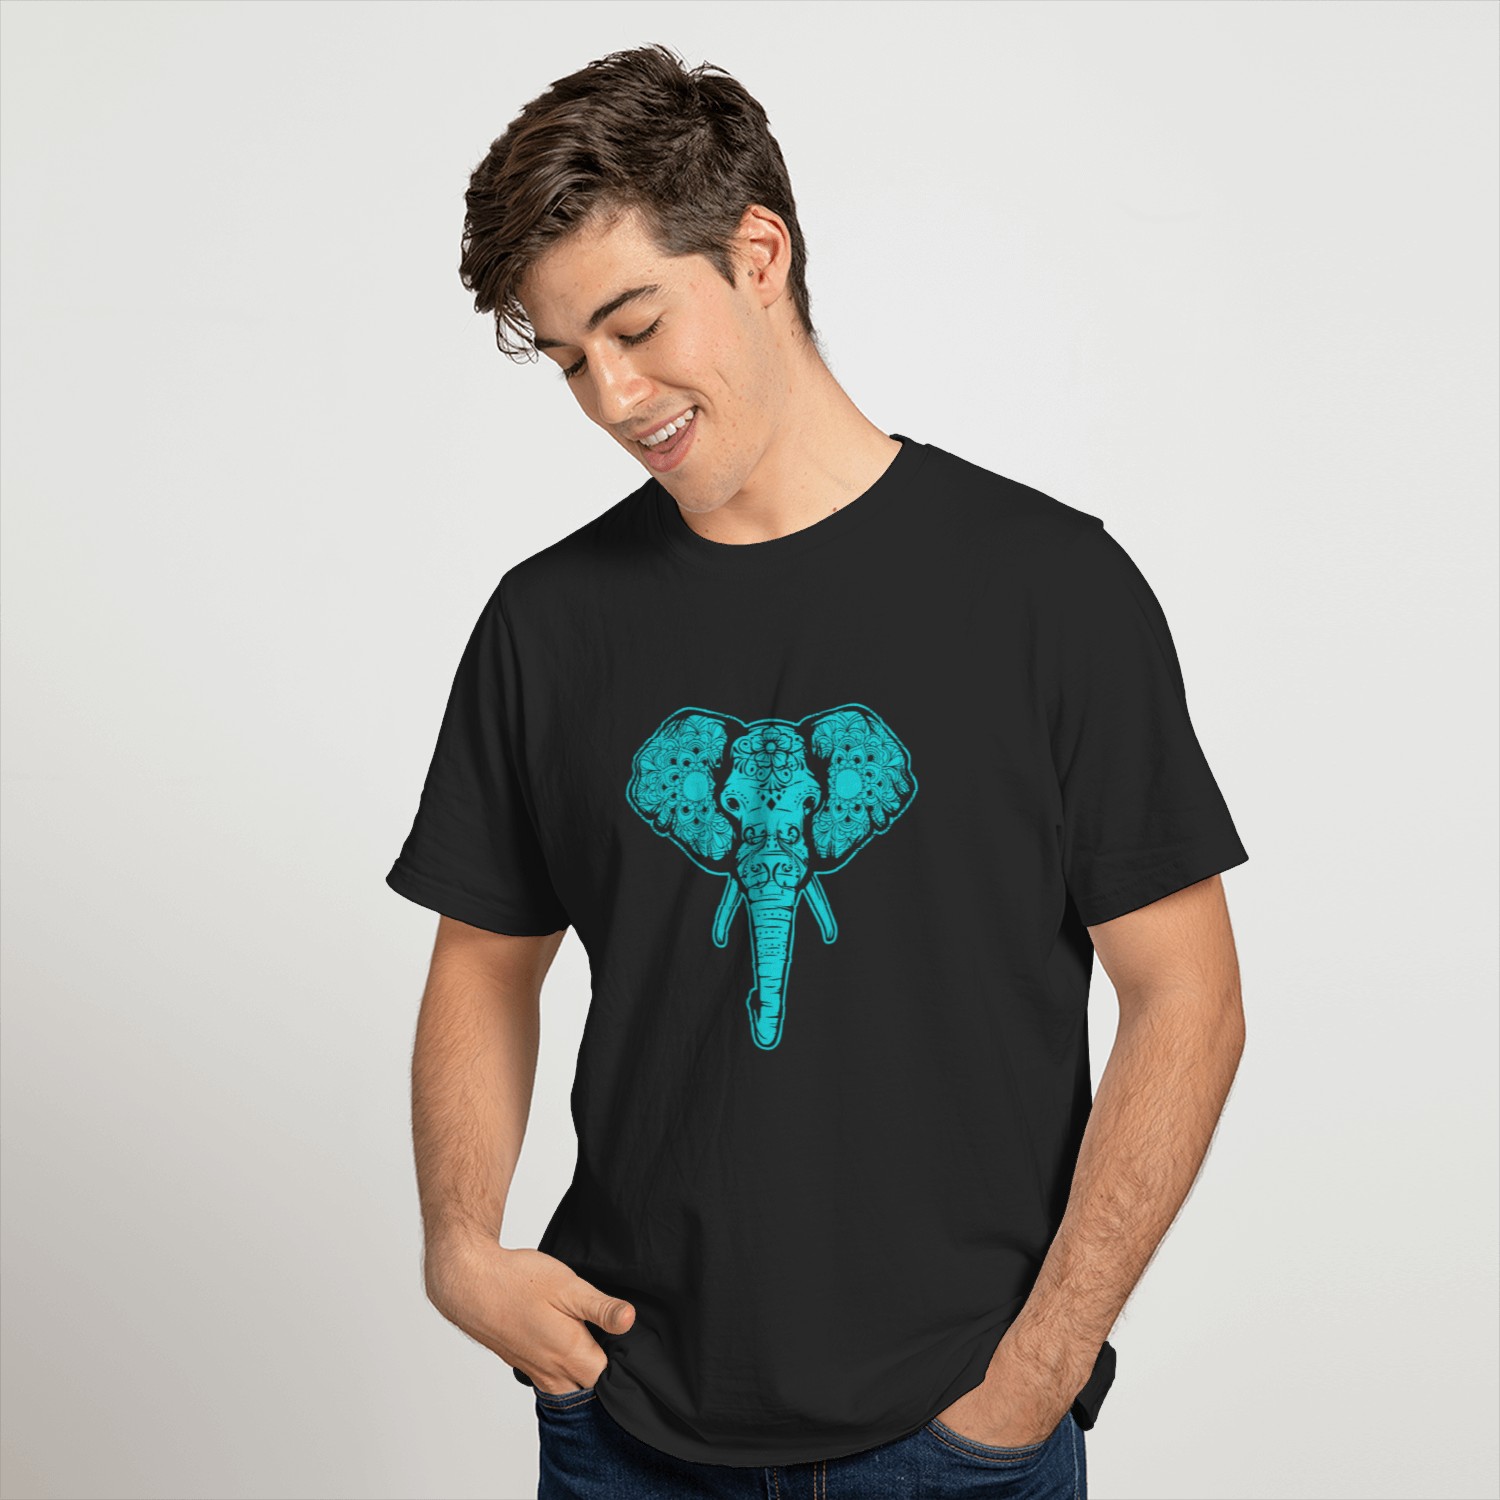 Blue Elephant T-shirt